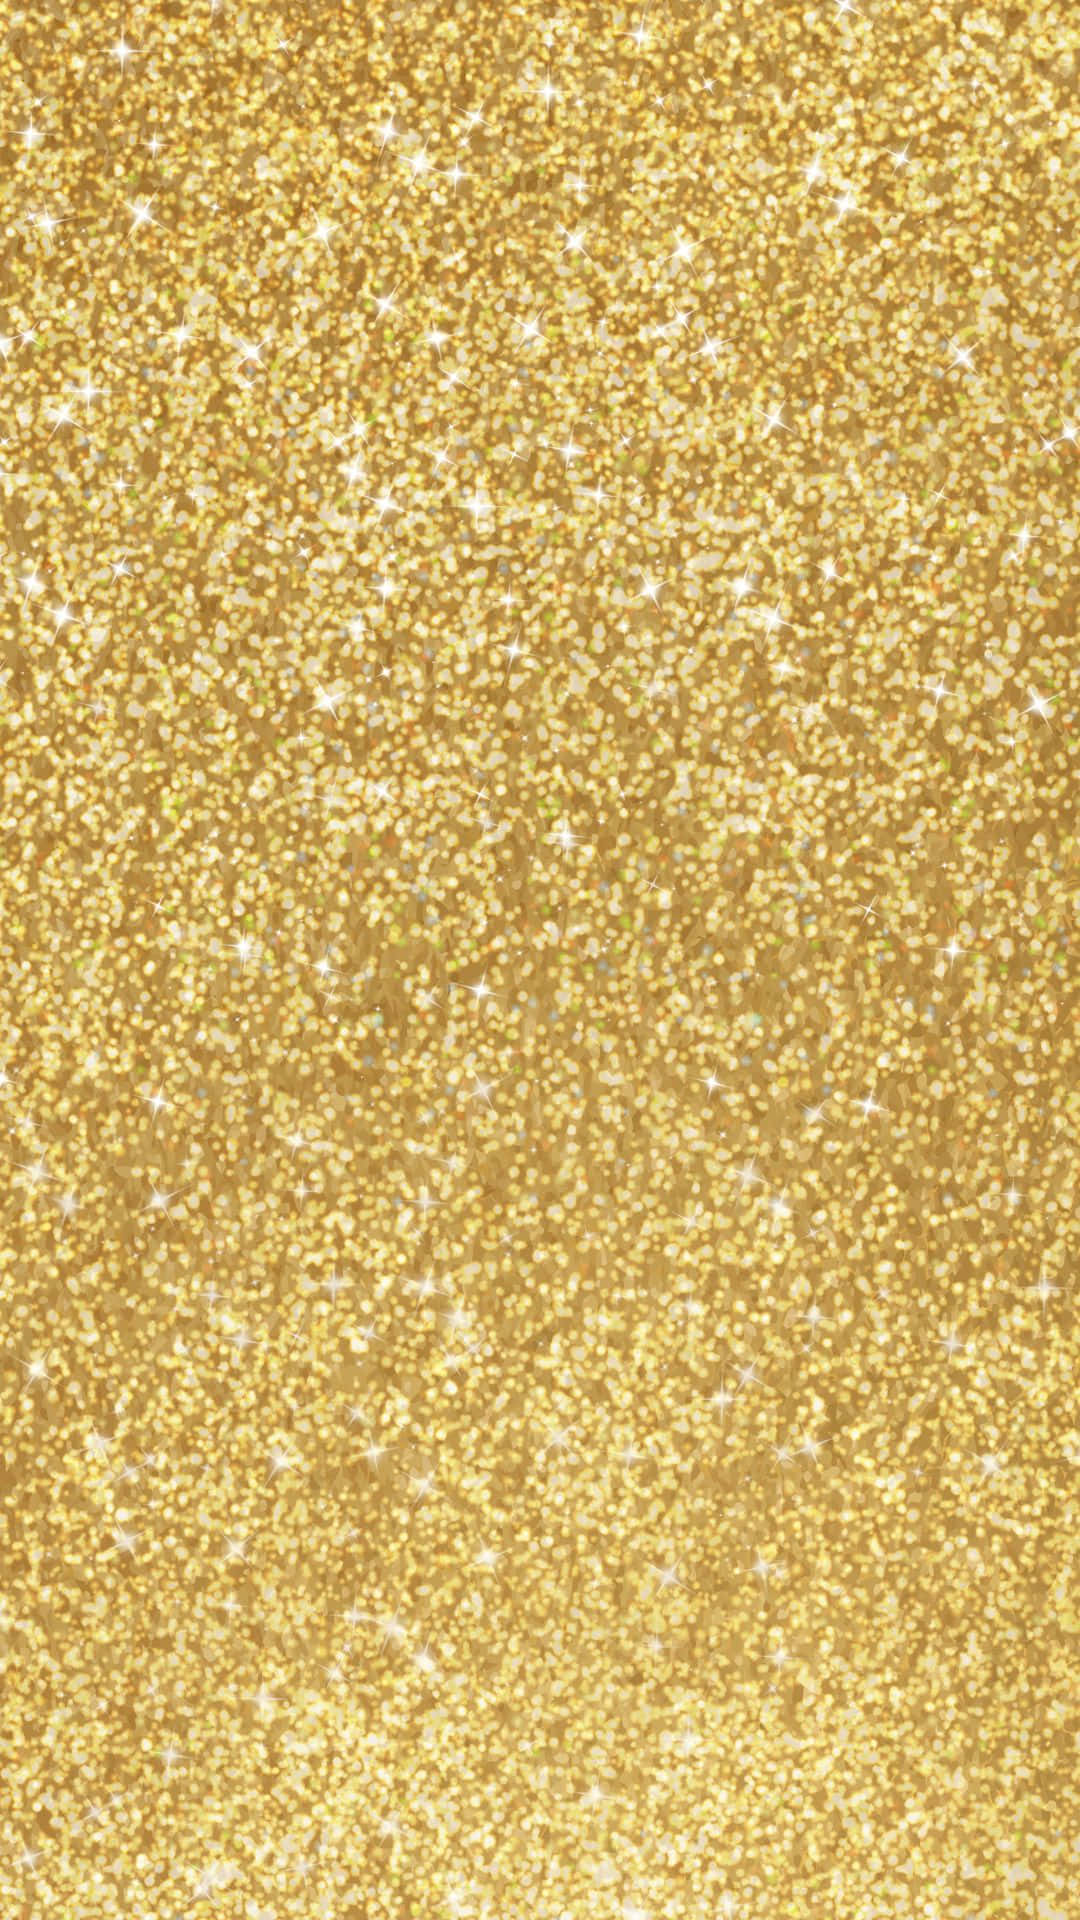 Shimmering Glitters Gold Metallic Background